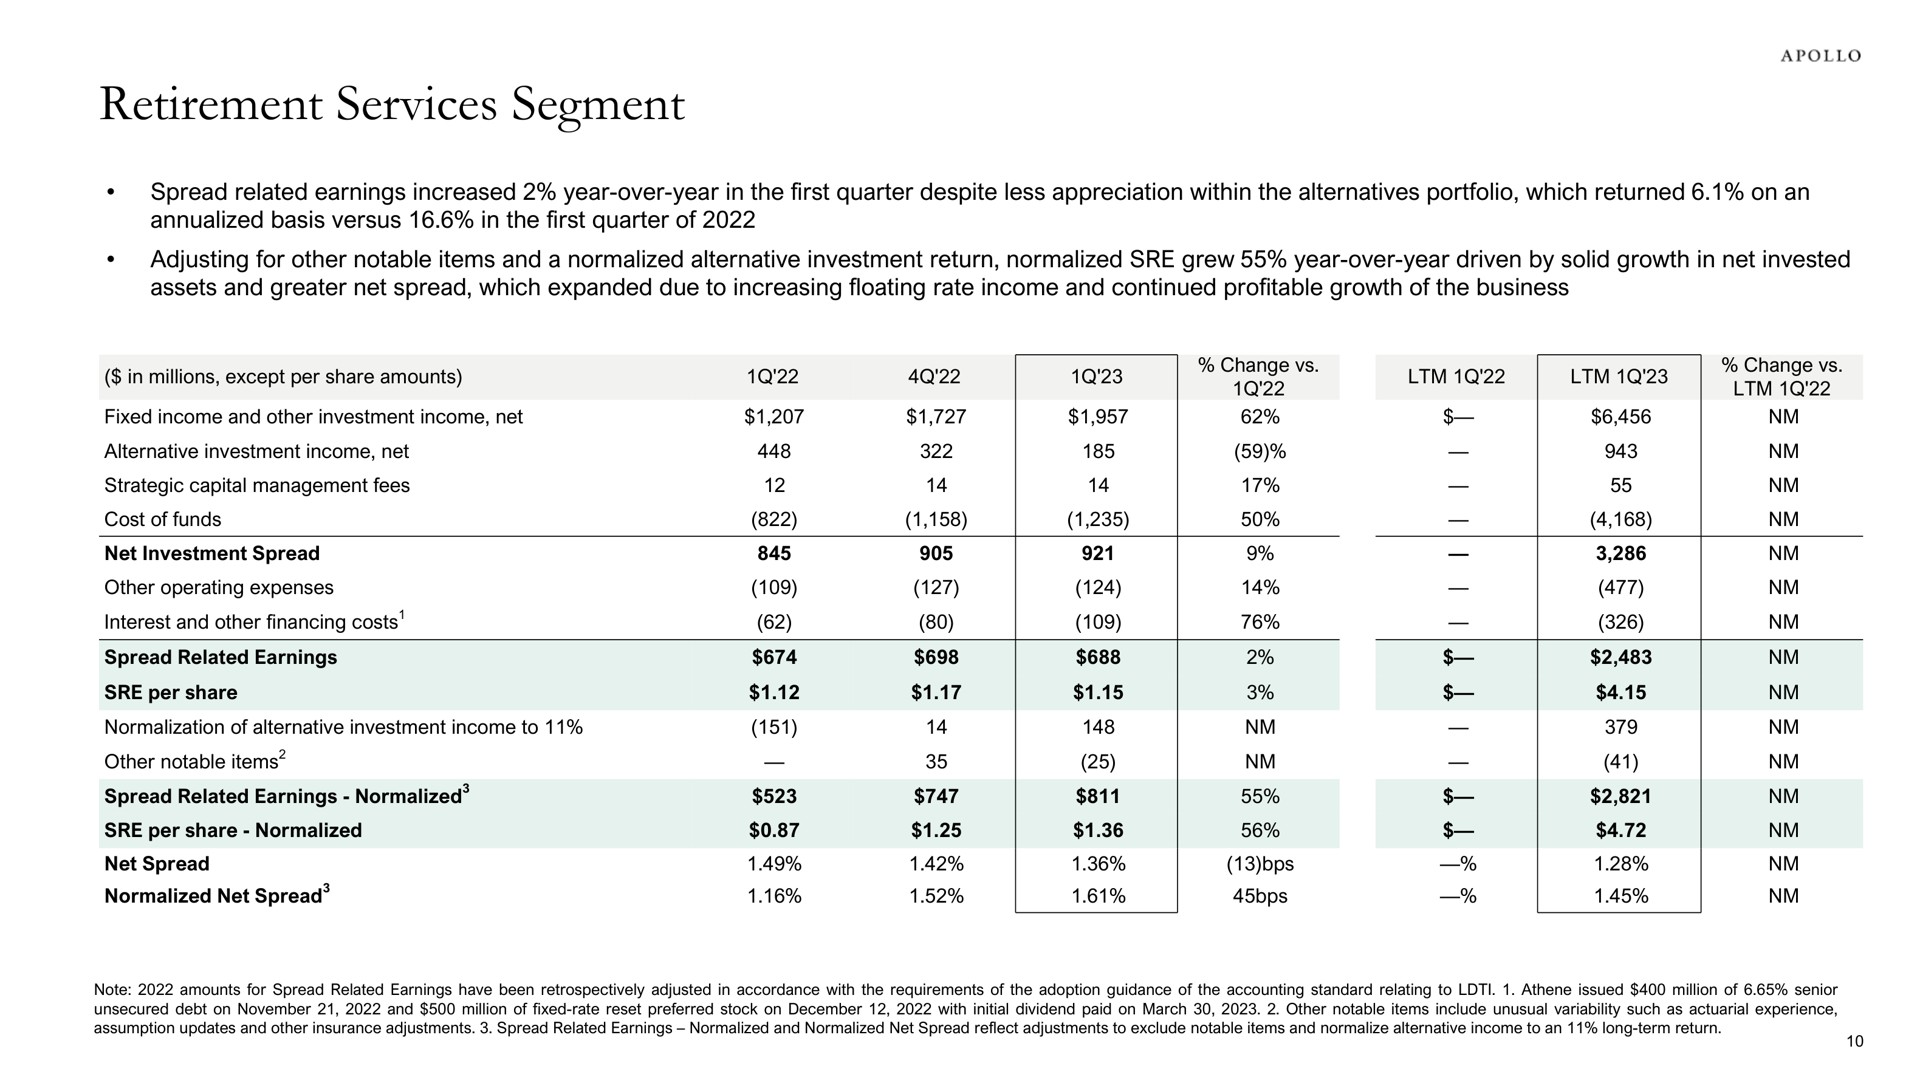 retirement services segment in millions except per share amounts | Apollo Global Management